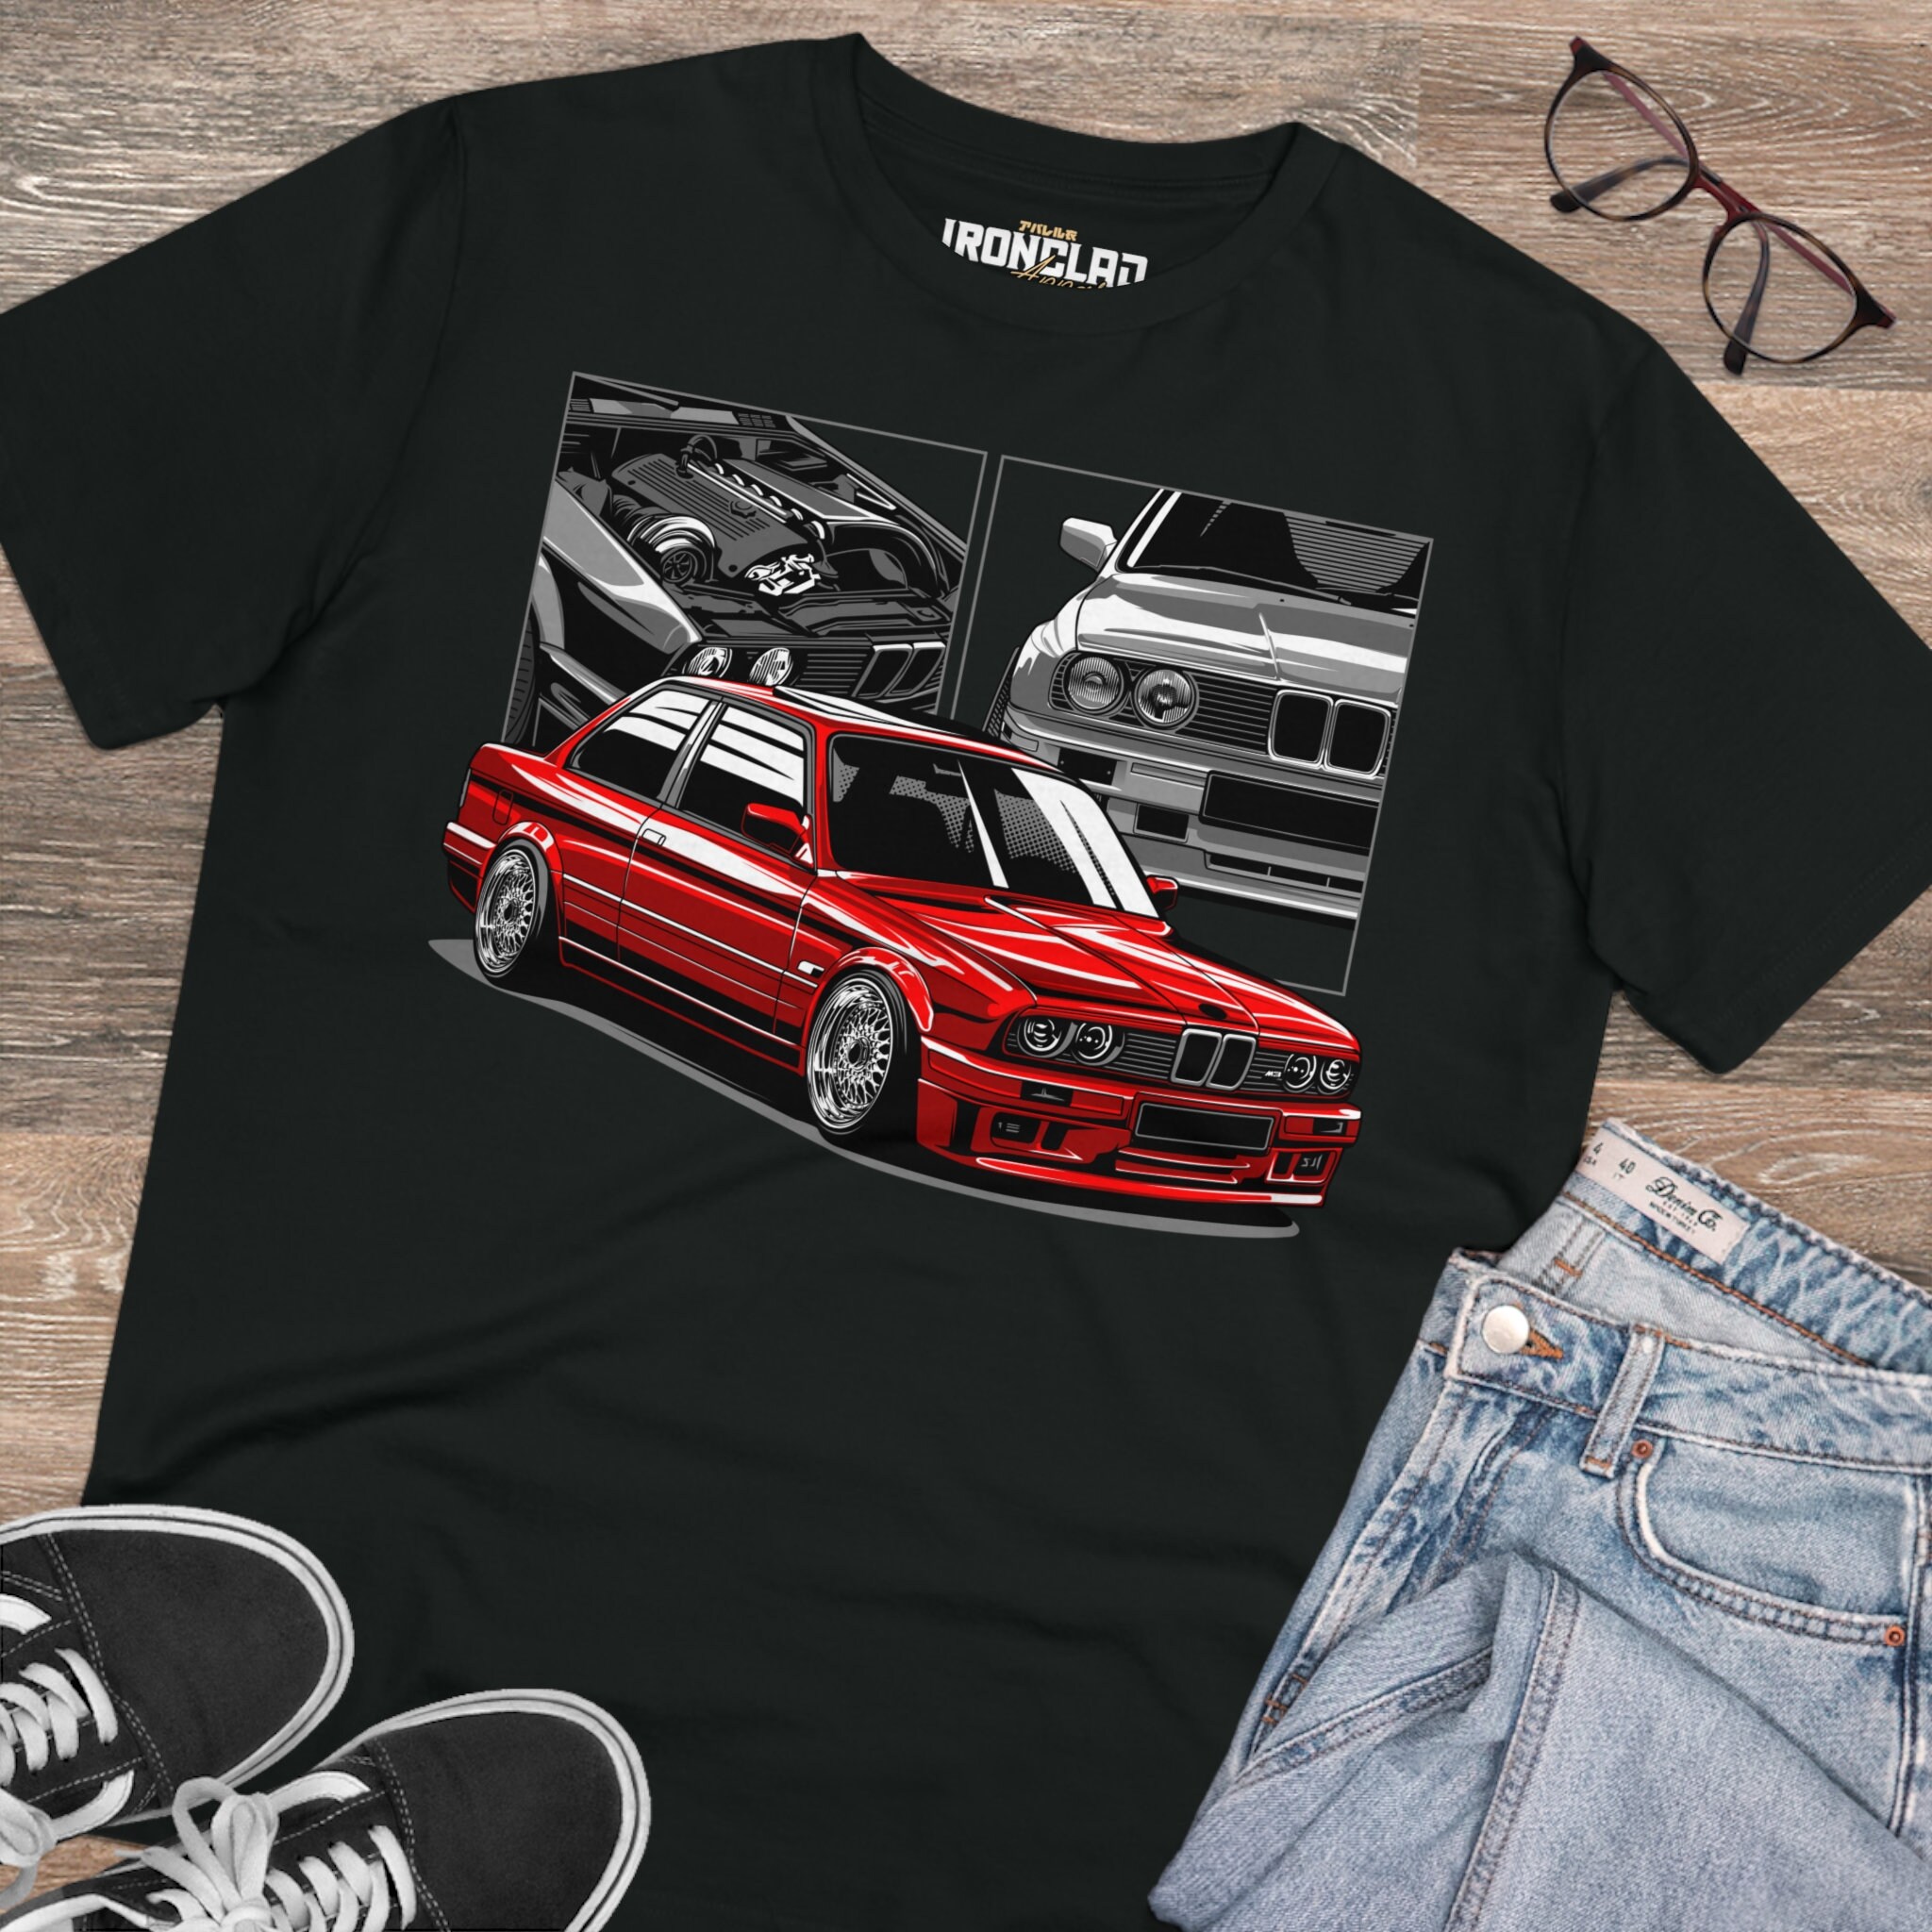 T-shirt for Bmw E30 Fans 316 318 320 323i 325i M3 Classic German Drift Car  Tshirt Sweatshirt 